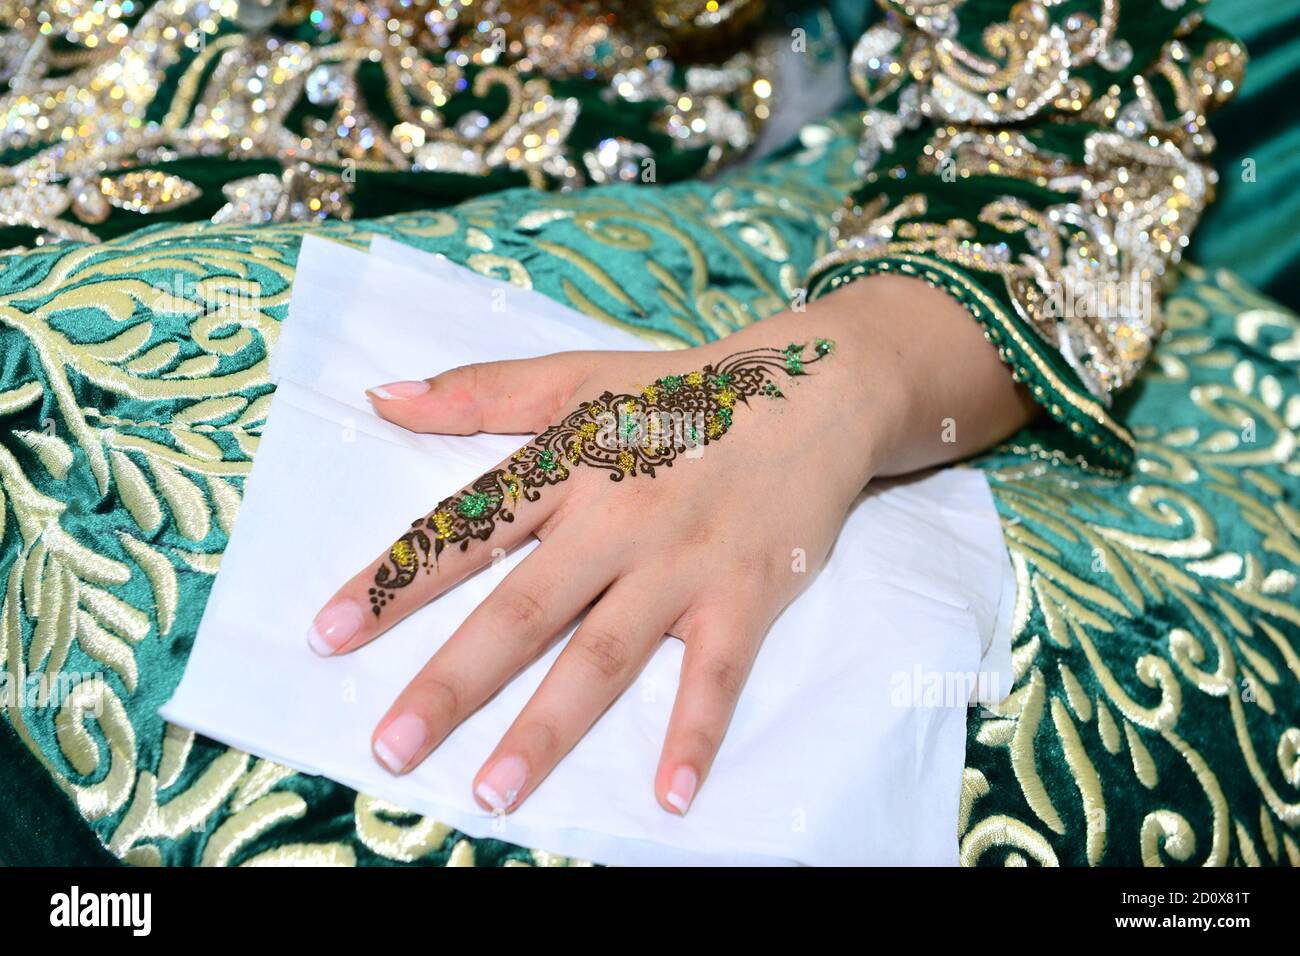 Black henna: 'My holiday henna tattoo scarred me for life' - BBC Three